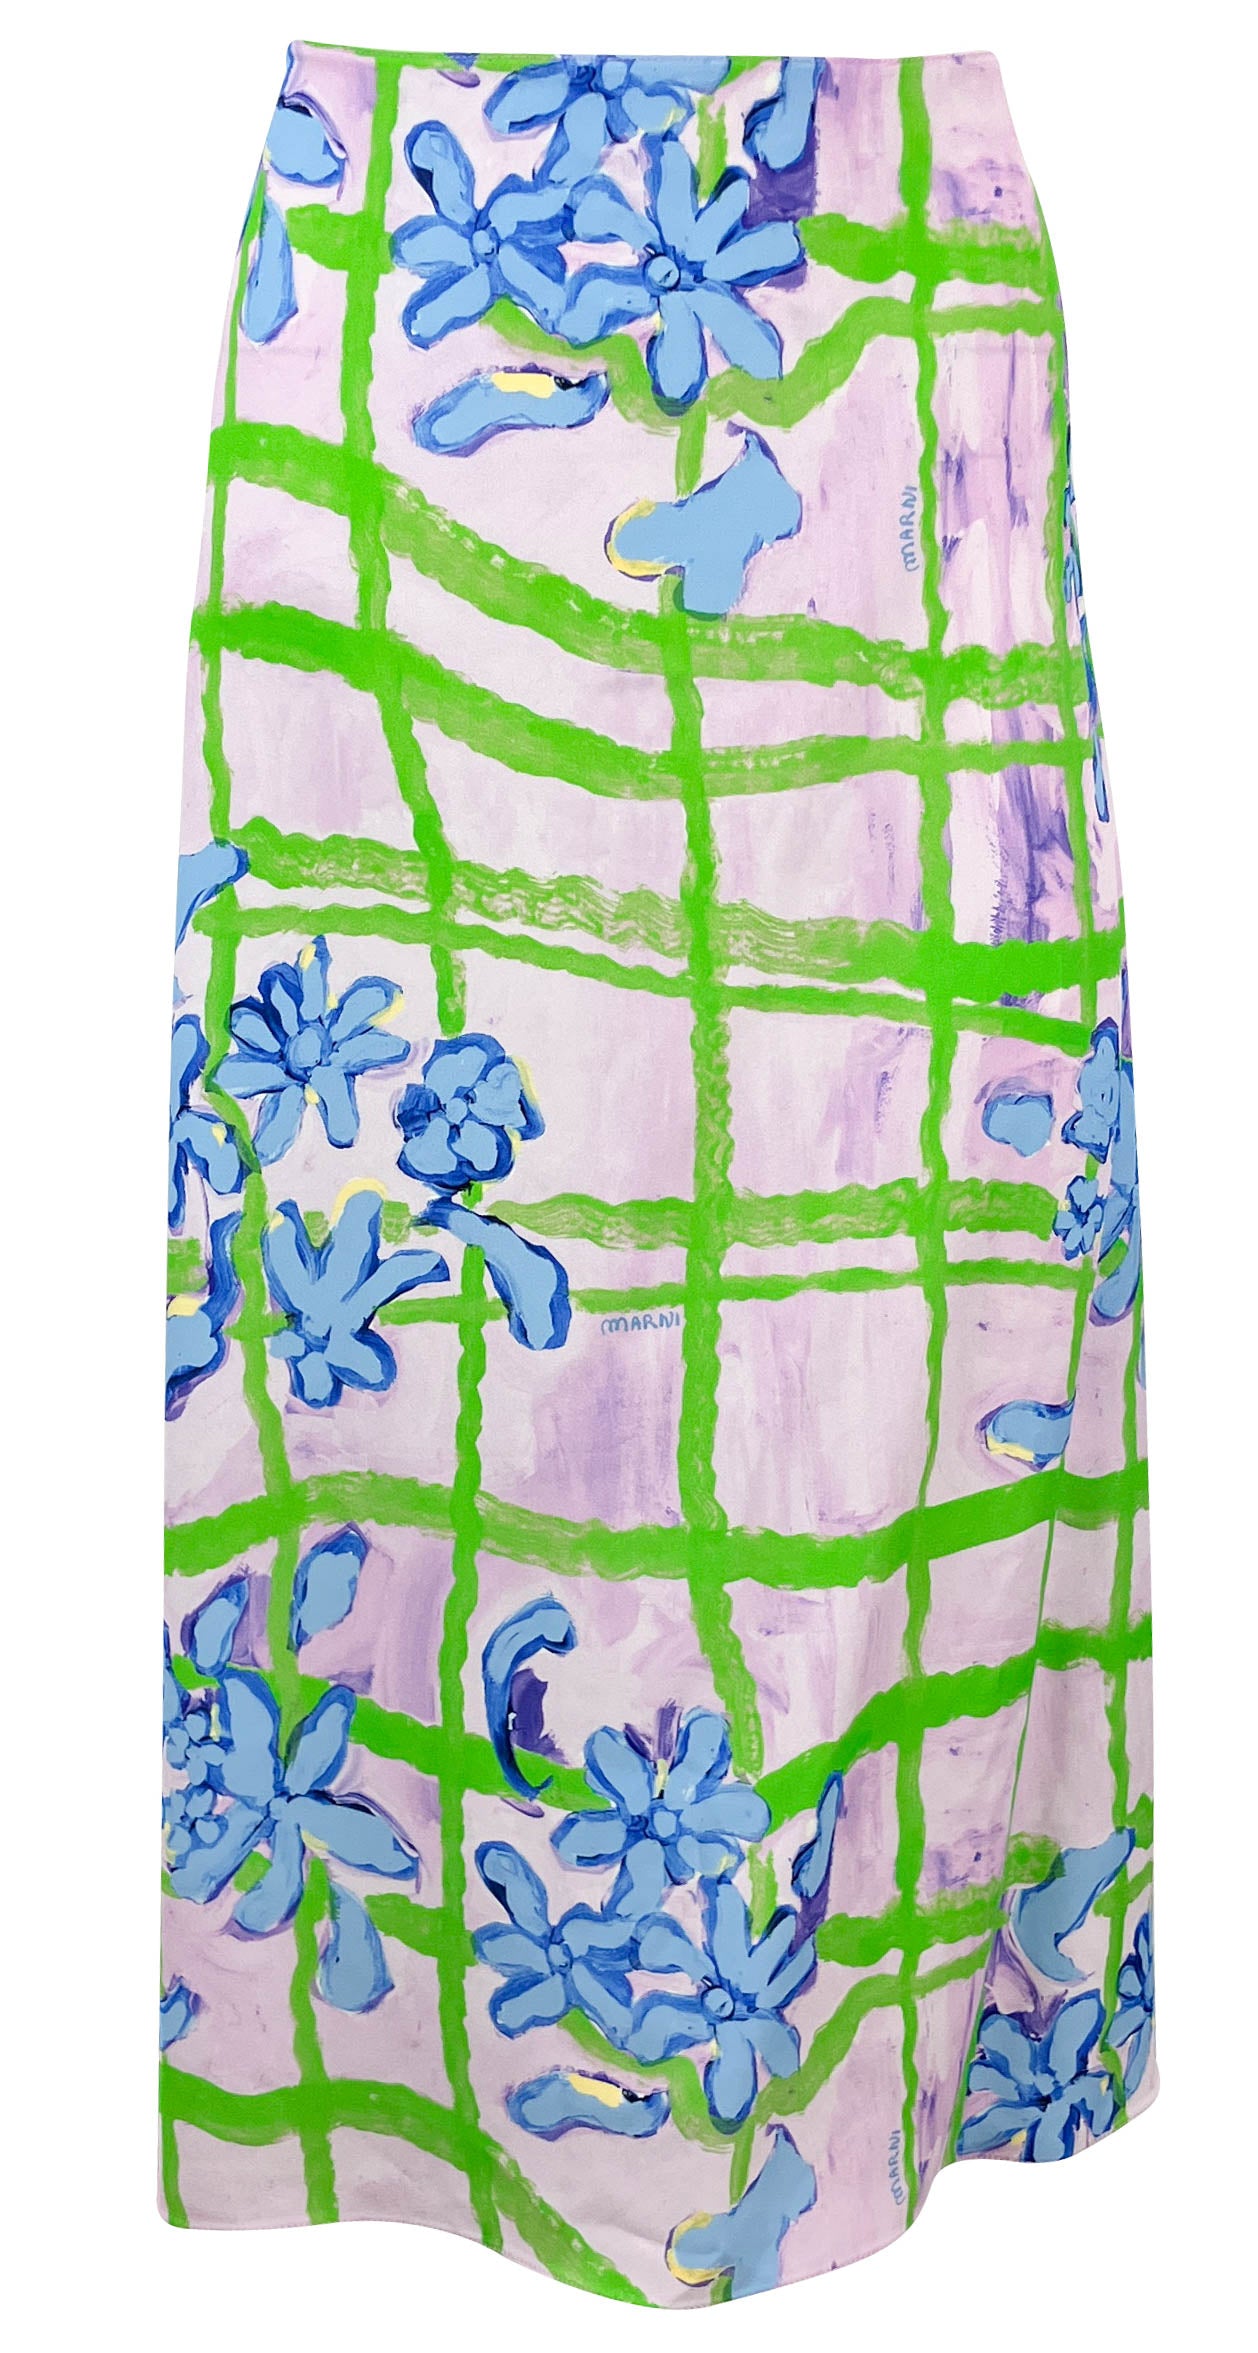 Marni Floral Printed Skirt in Mauve - Discounts on Marni at UAL